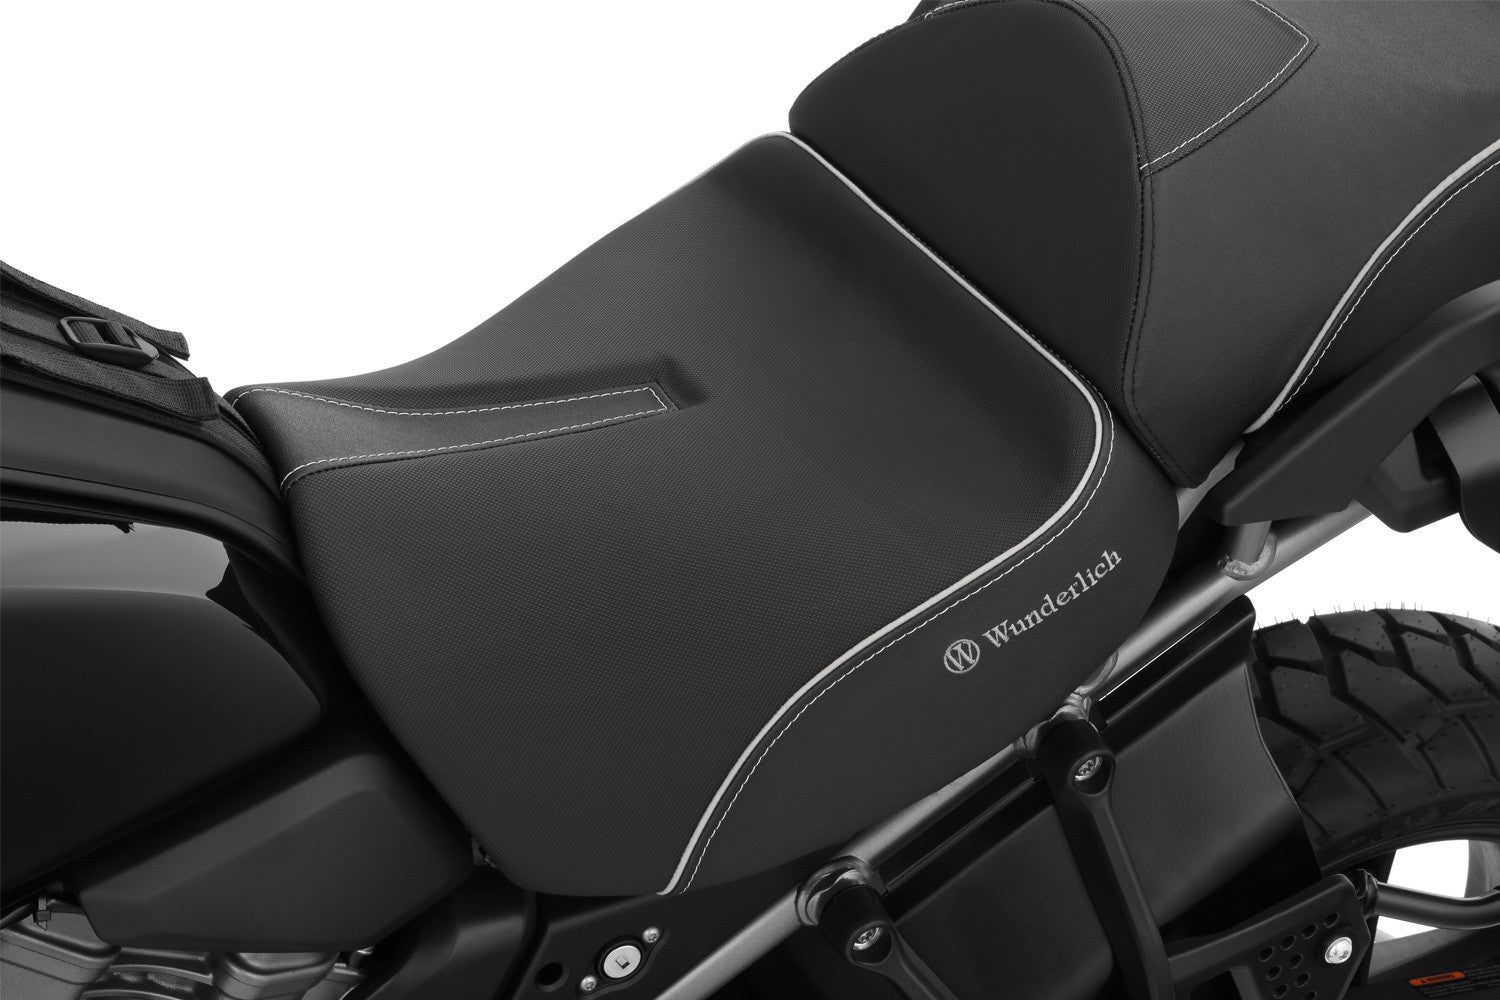 HD PAN America Ergonomics - Rider Seat